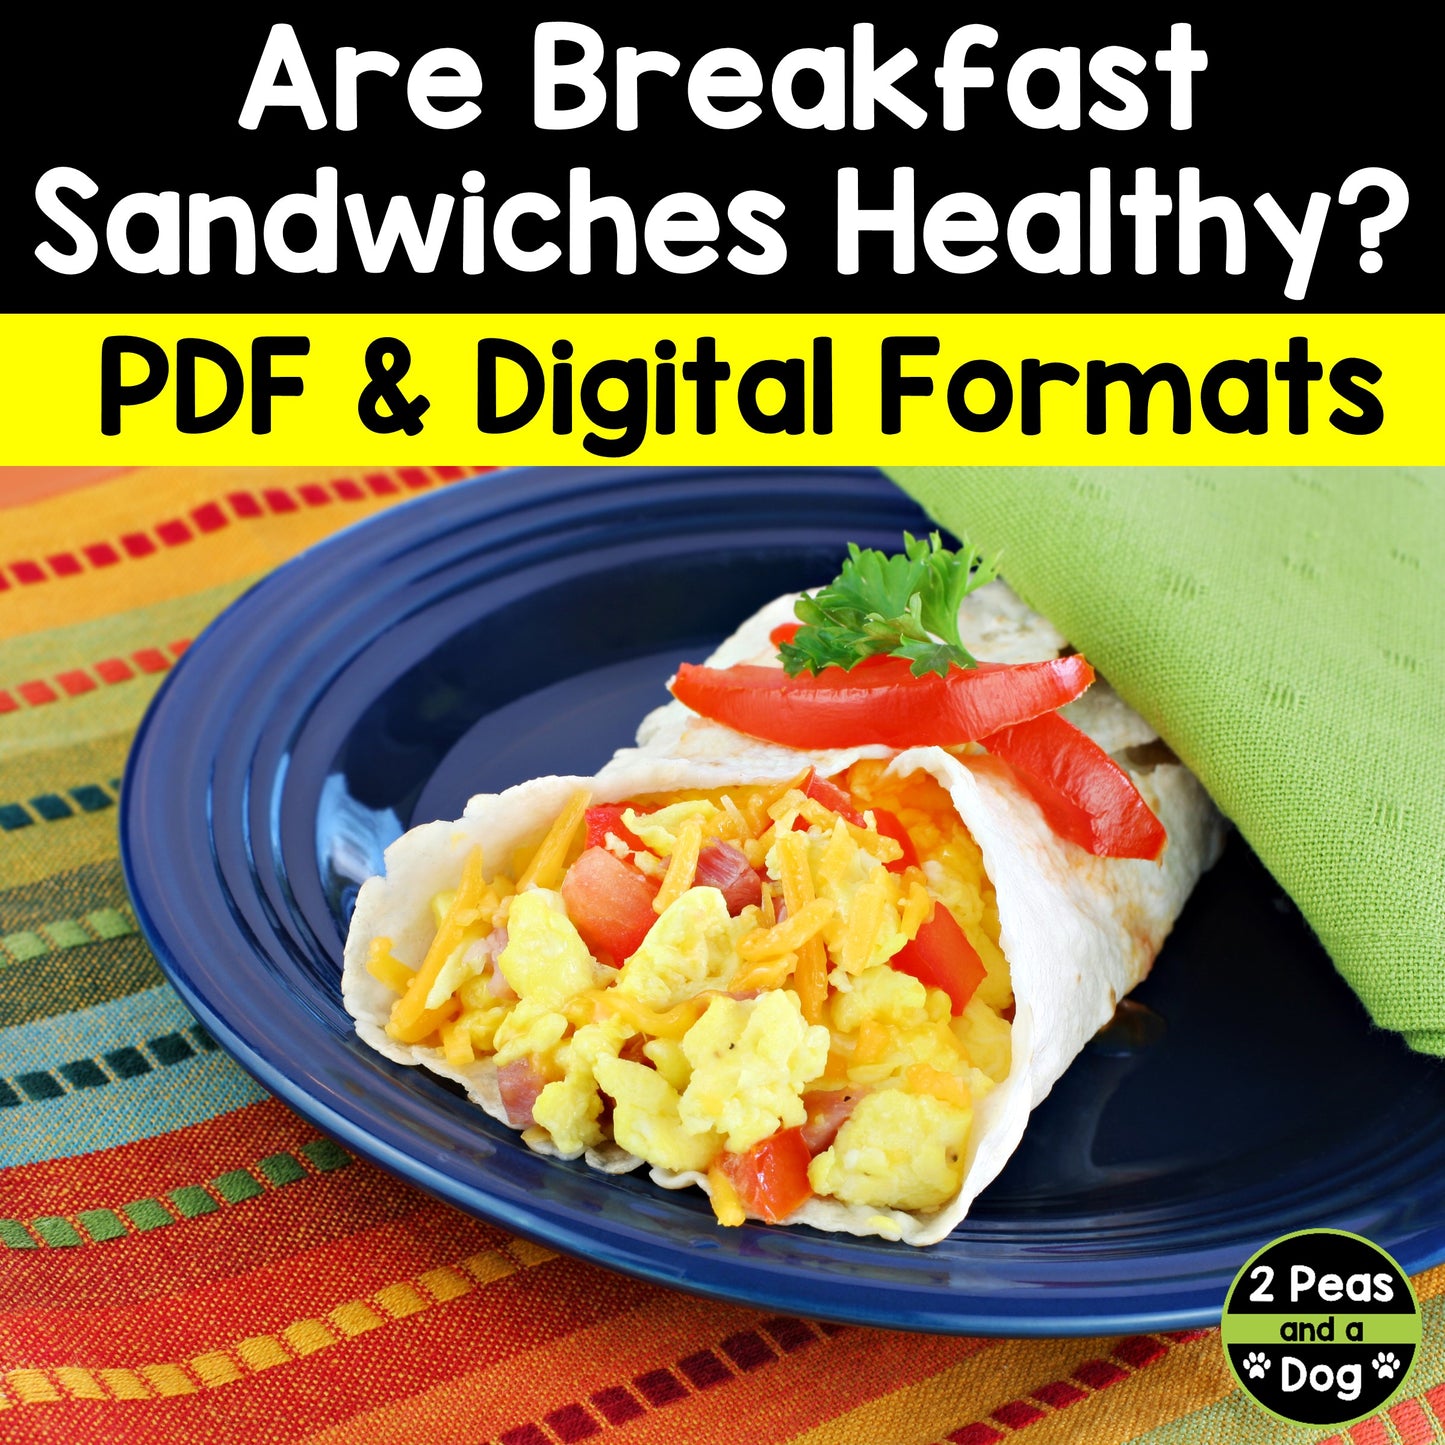 Media Literacy: Consumer Awareness Lesson - Breakfast Sandwiches